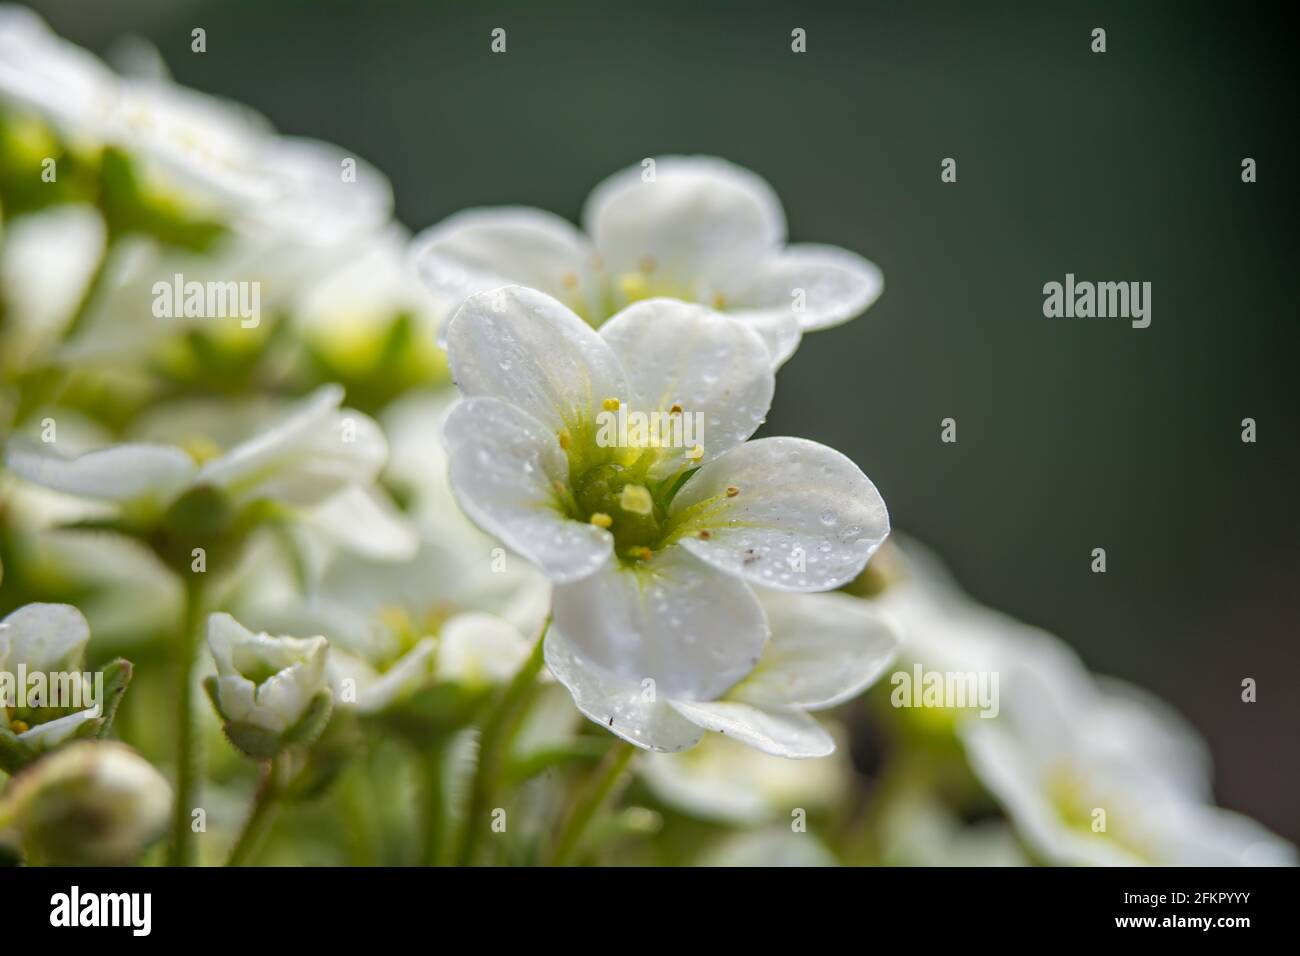 Saxifraga - a genus of plants belonging to the saxifrage family. Stock Photo